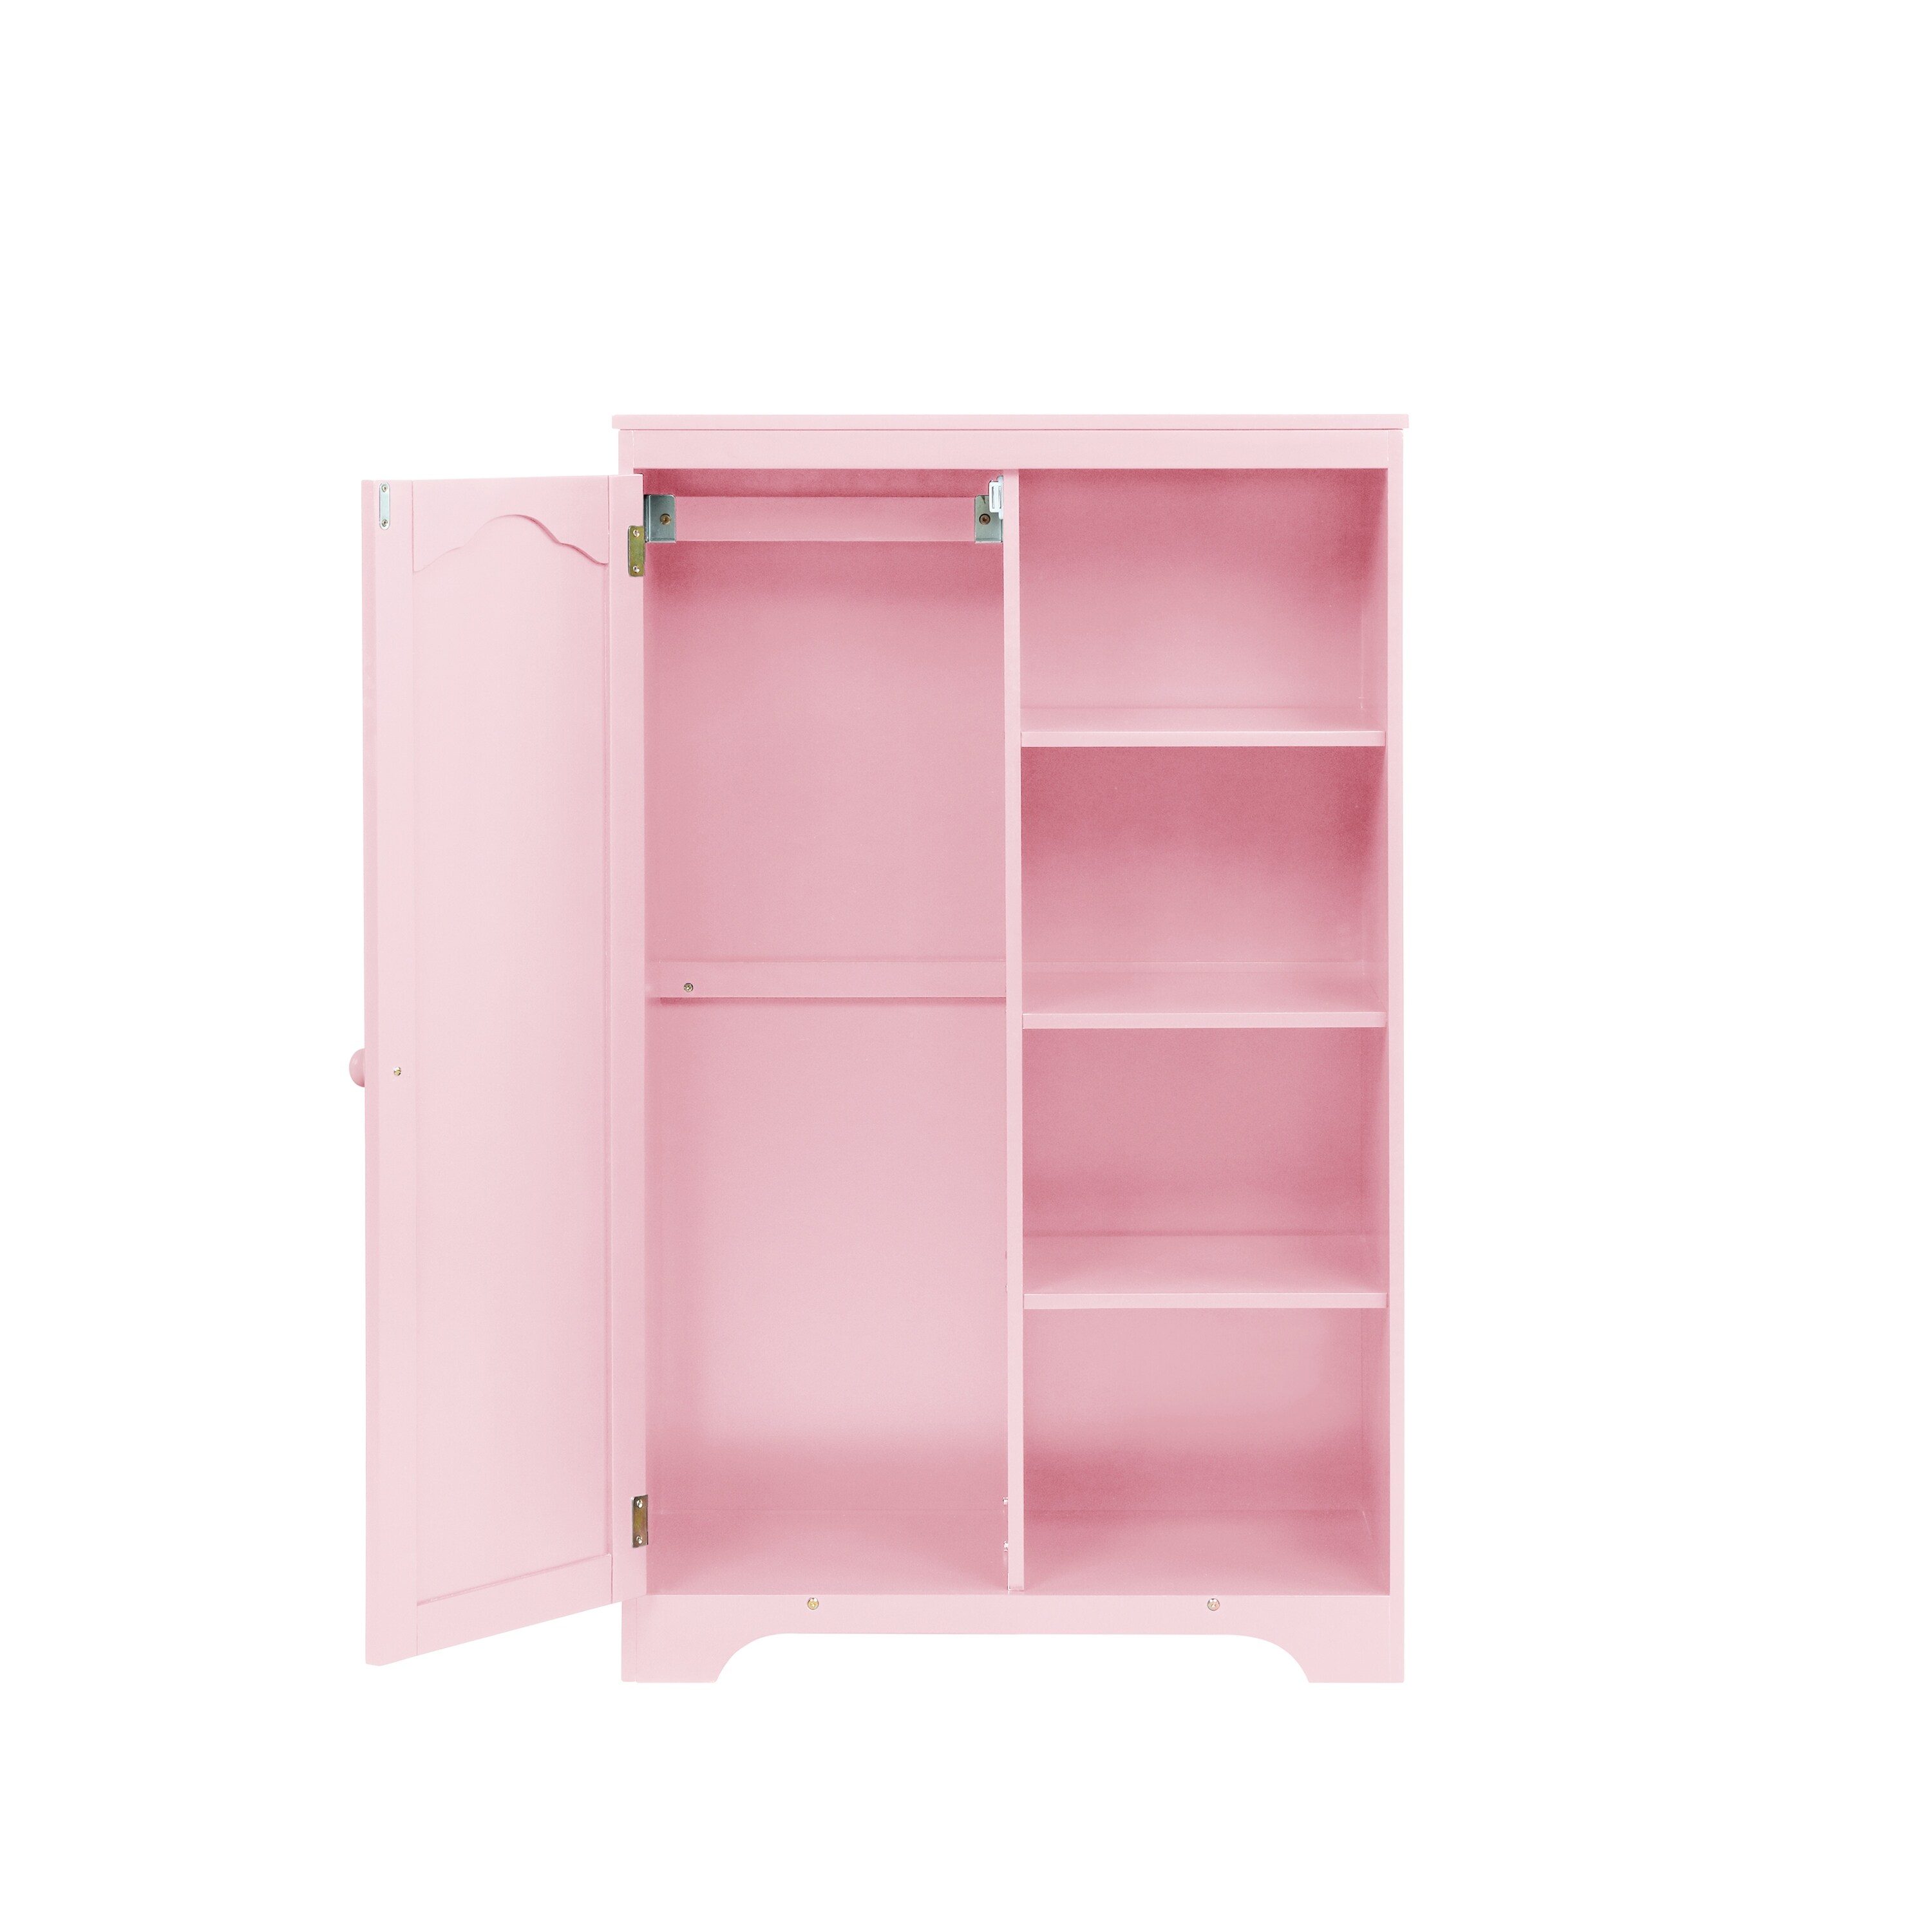 Practiacal Side Cabinet With 1 Door And Shelf,Modern Freestanding Storage cabinet